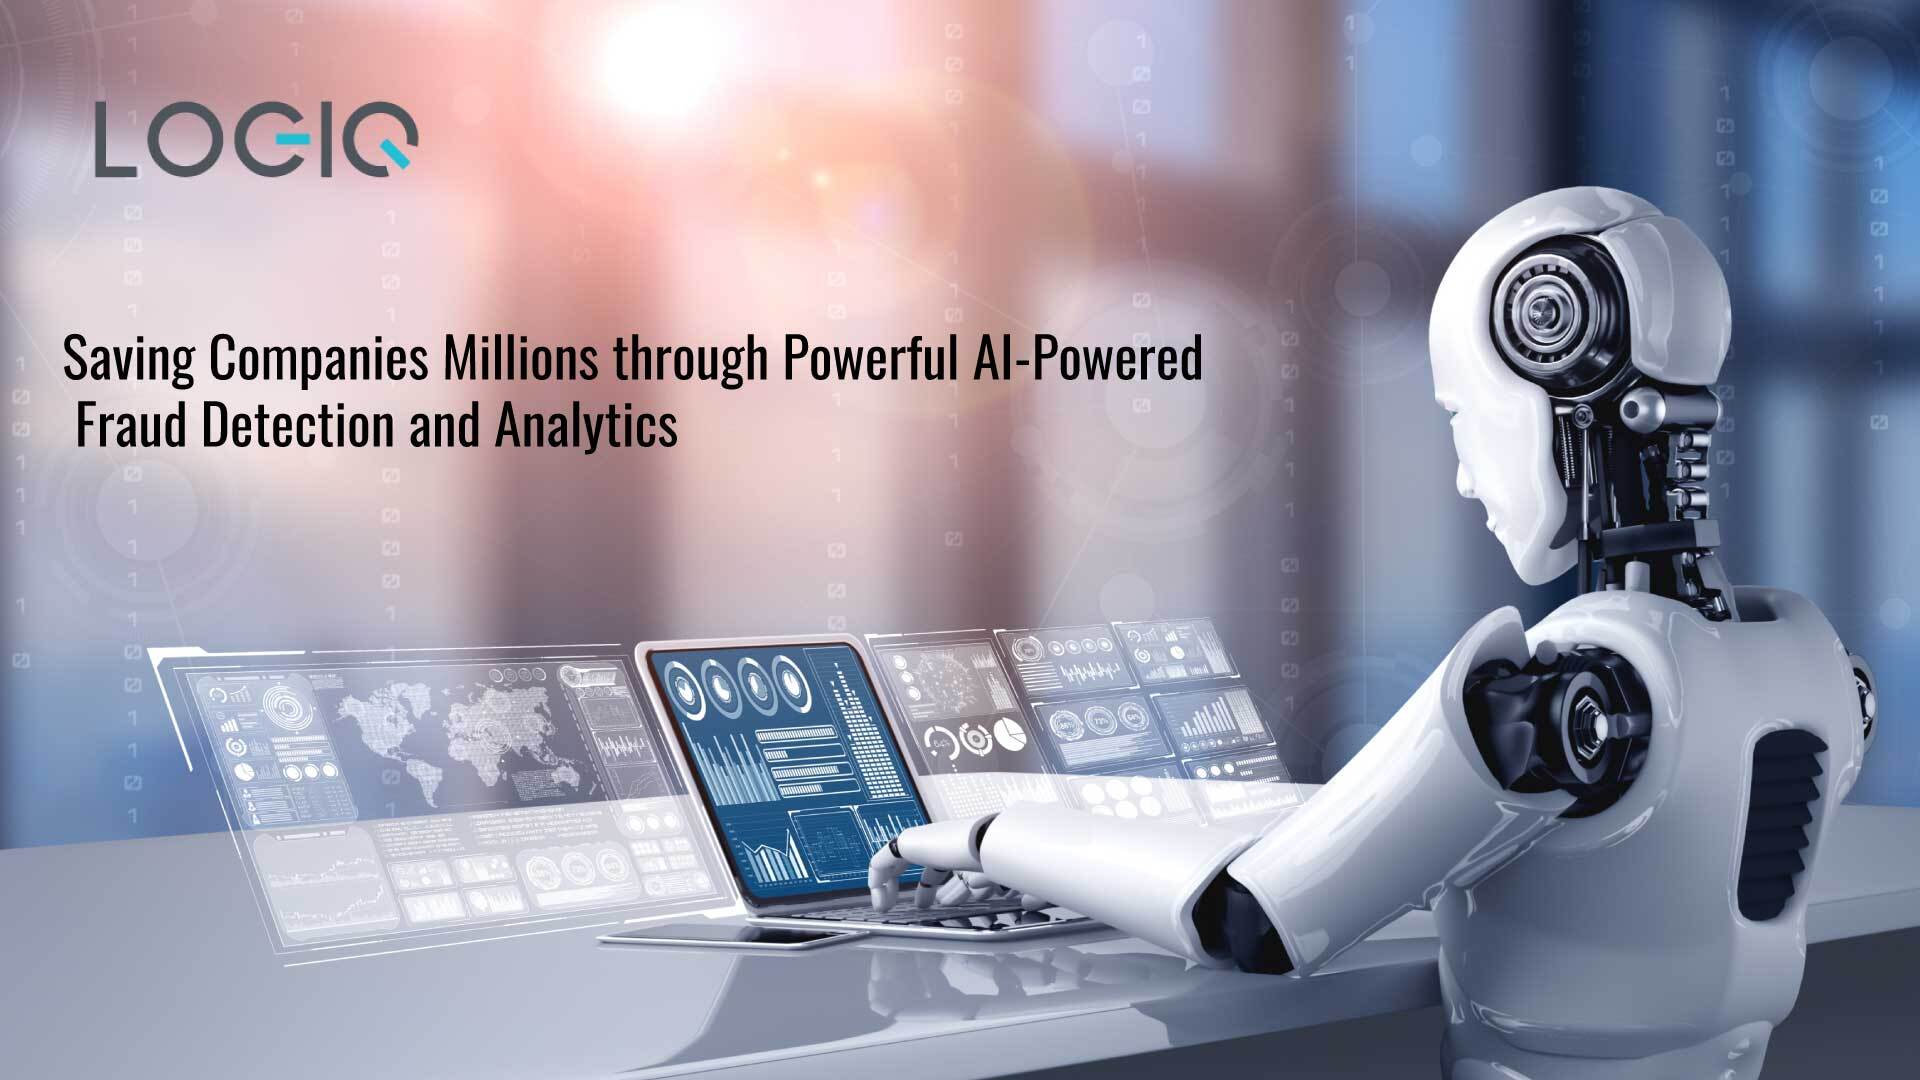 Logiq’s Advanced Programmatic Ad Platform Saving Companies Millions through Powerful AI-Powered Fraud Detection and Analytics